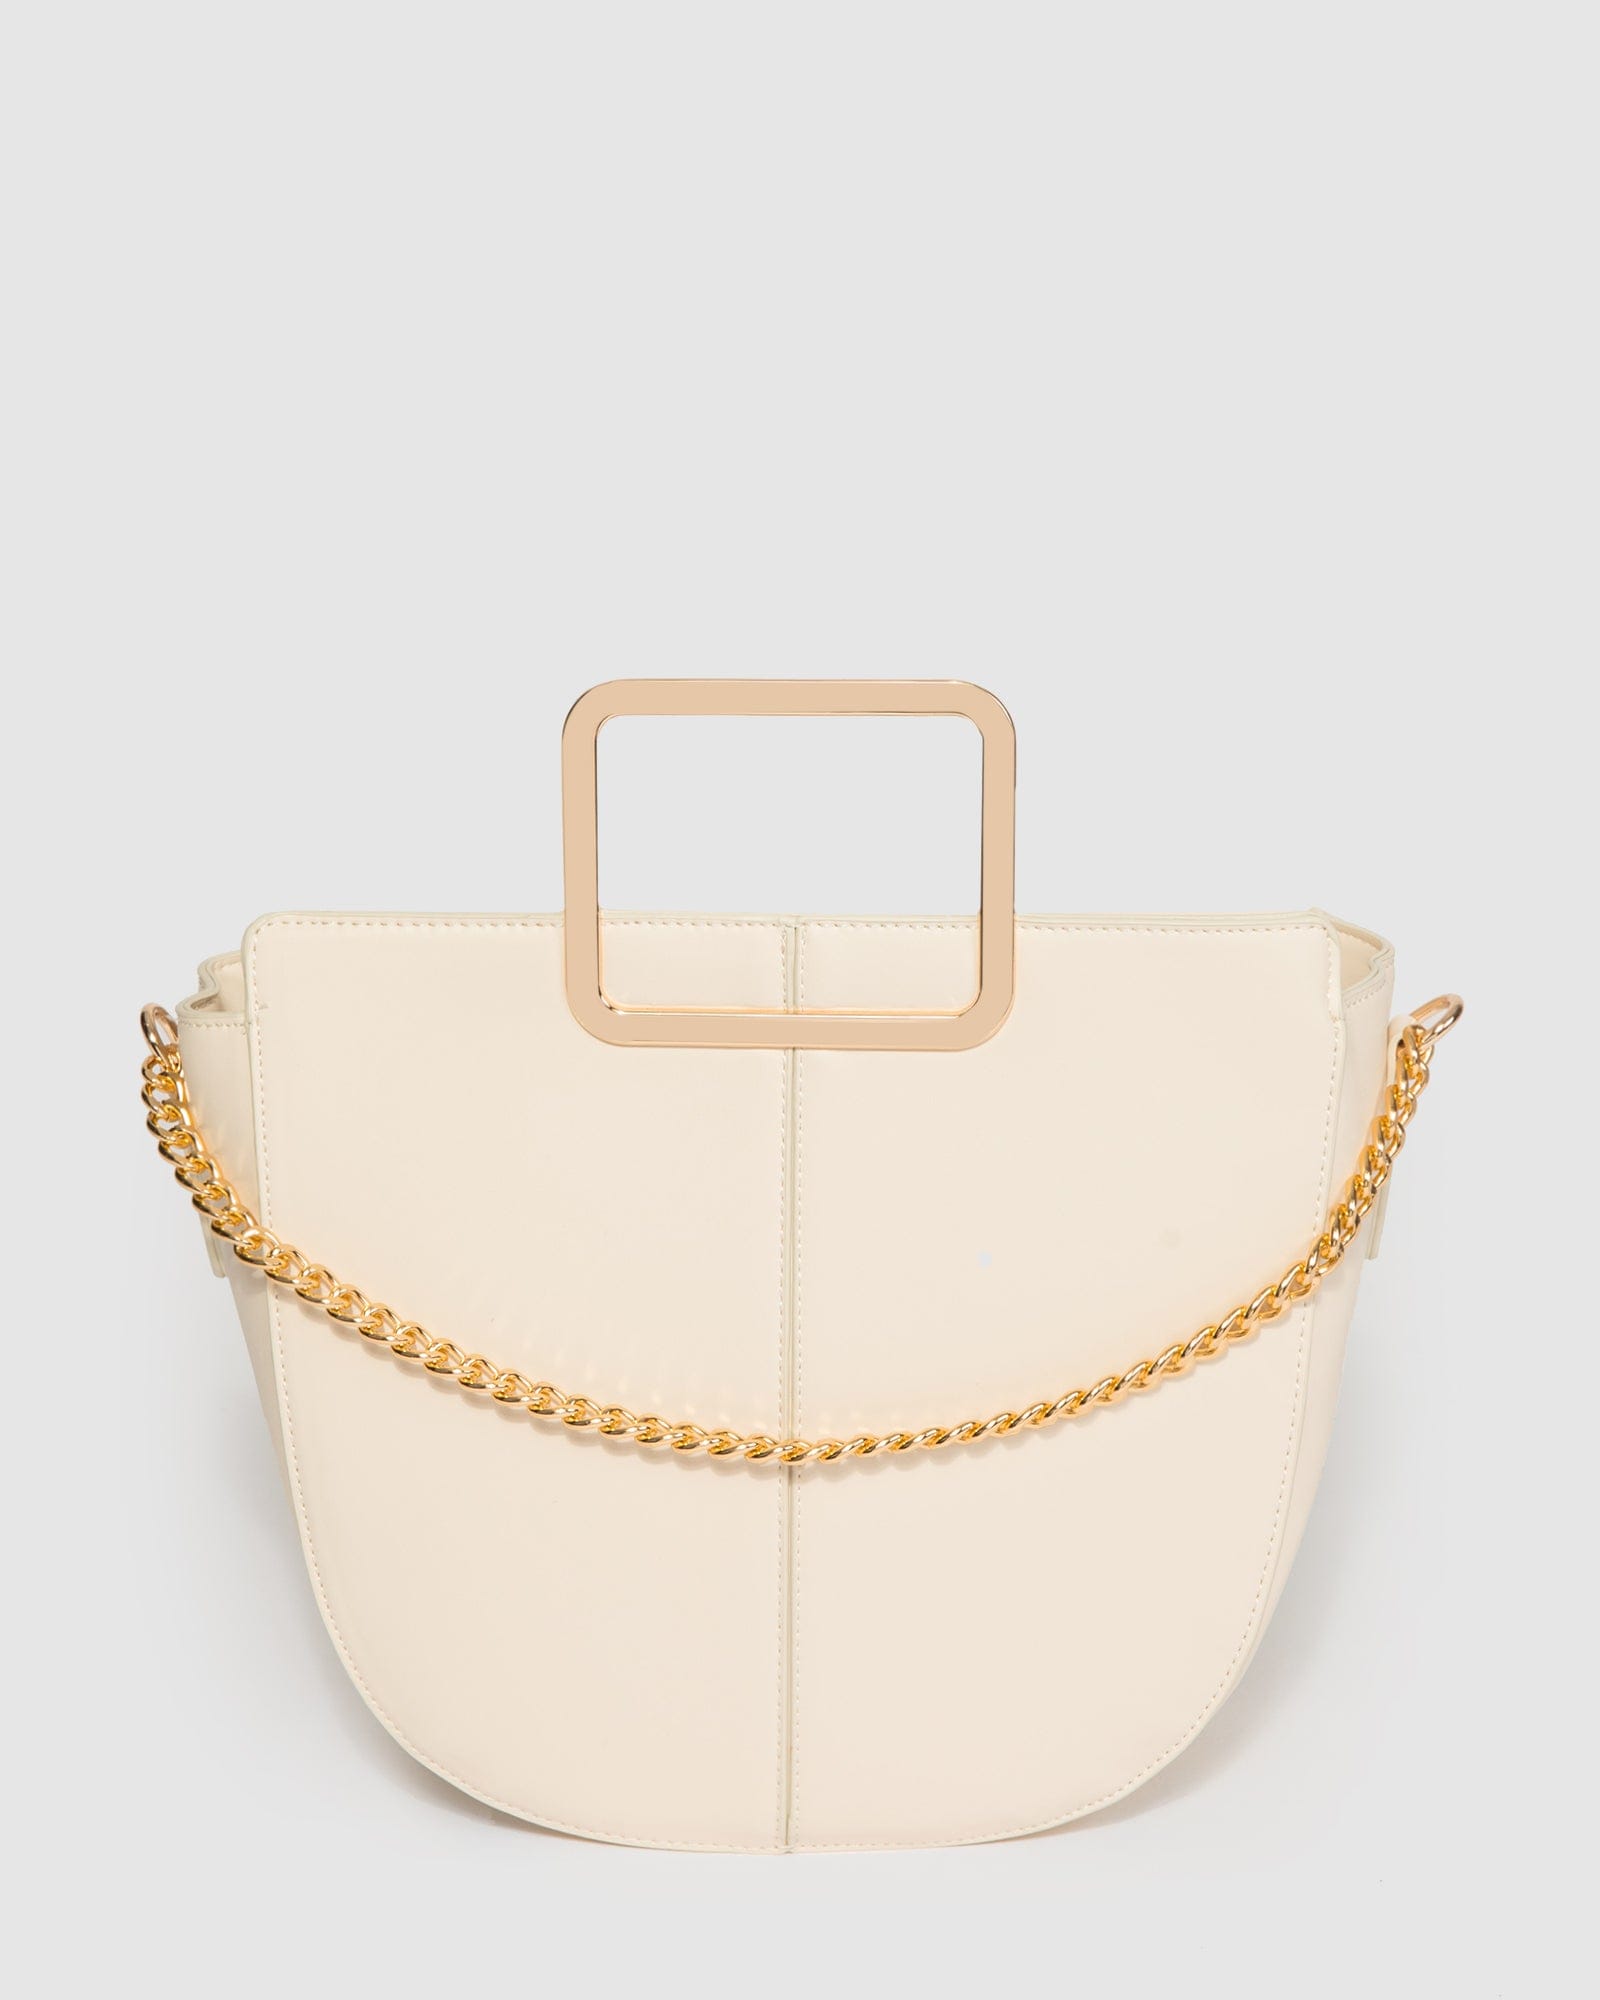 Black Monica Top Handle Bag Online | Colette Hayman | Vegan leather bag,  Top handle bag, Online bags